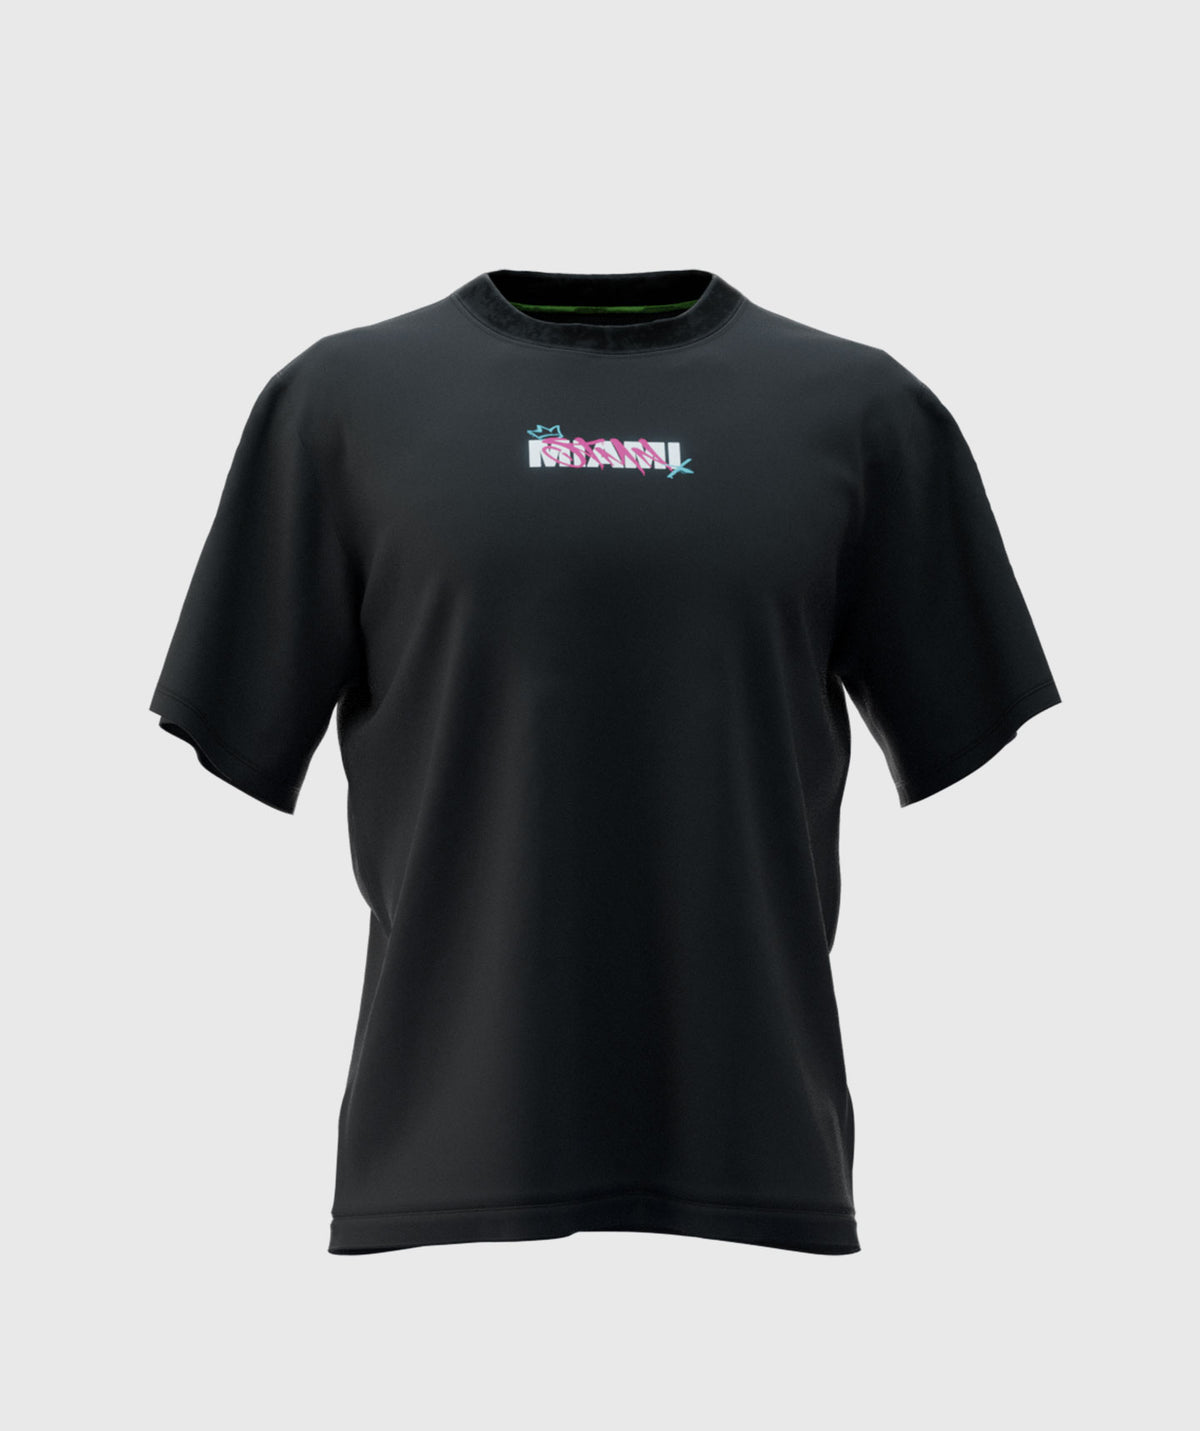 T-shirt "MIAMI 24" Loose-Fit Black